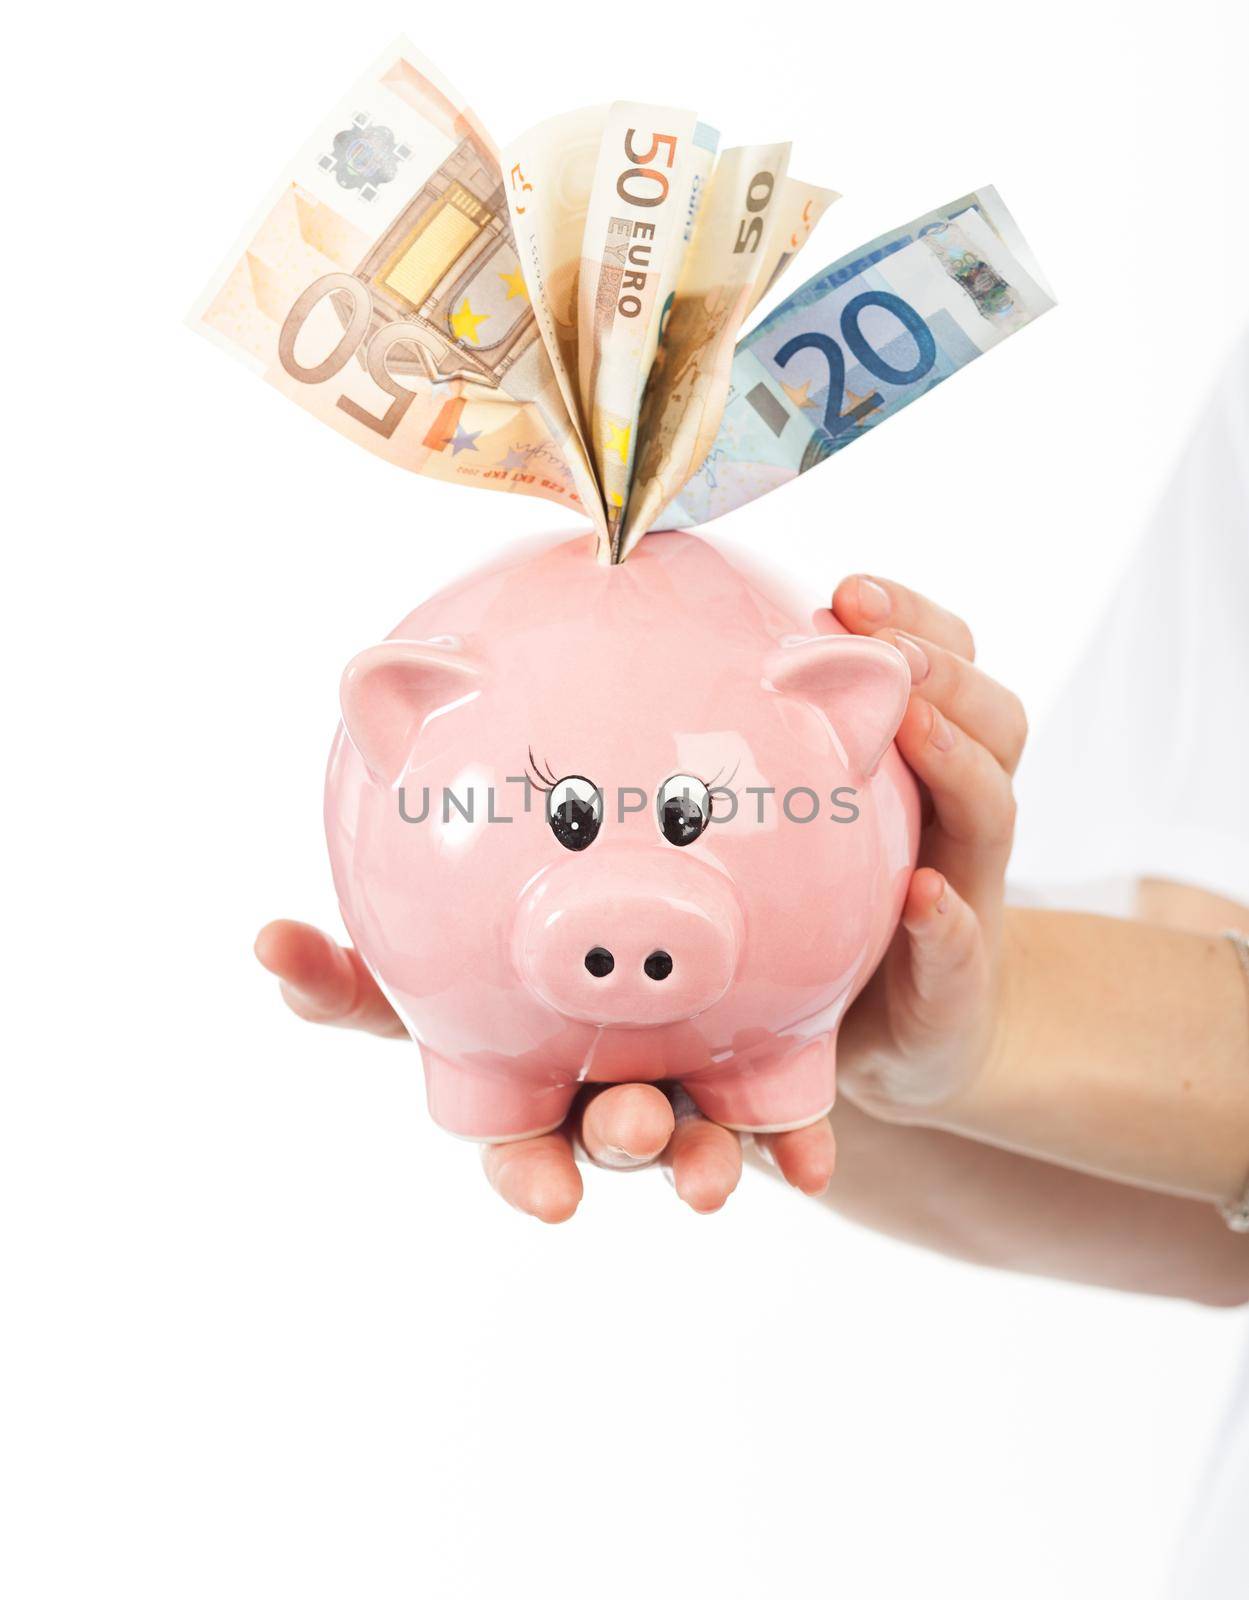 A woman shows a piggy bank full of European banknotes